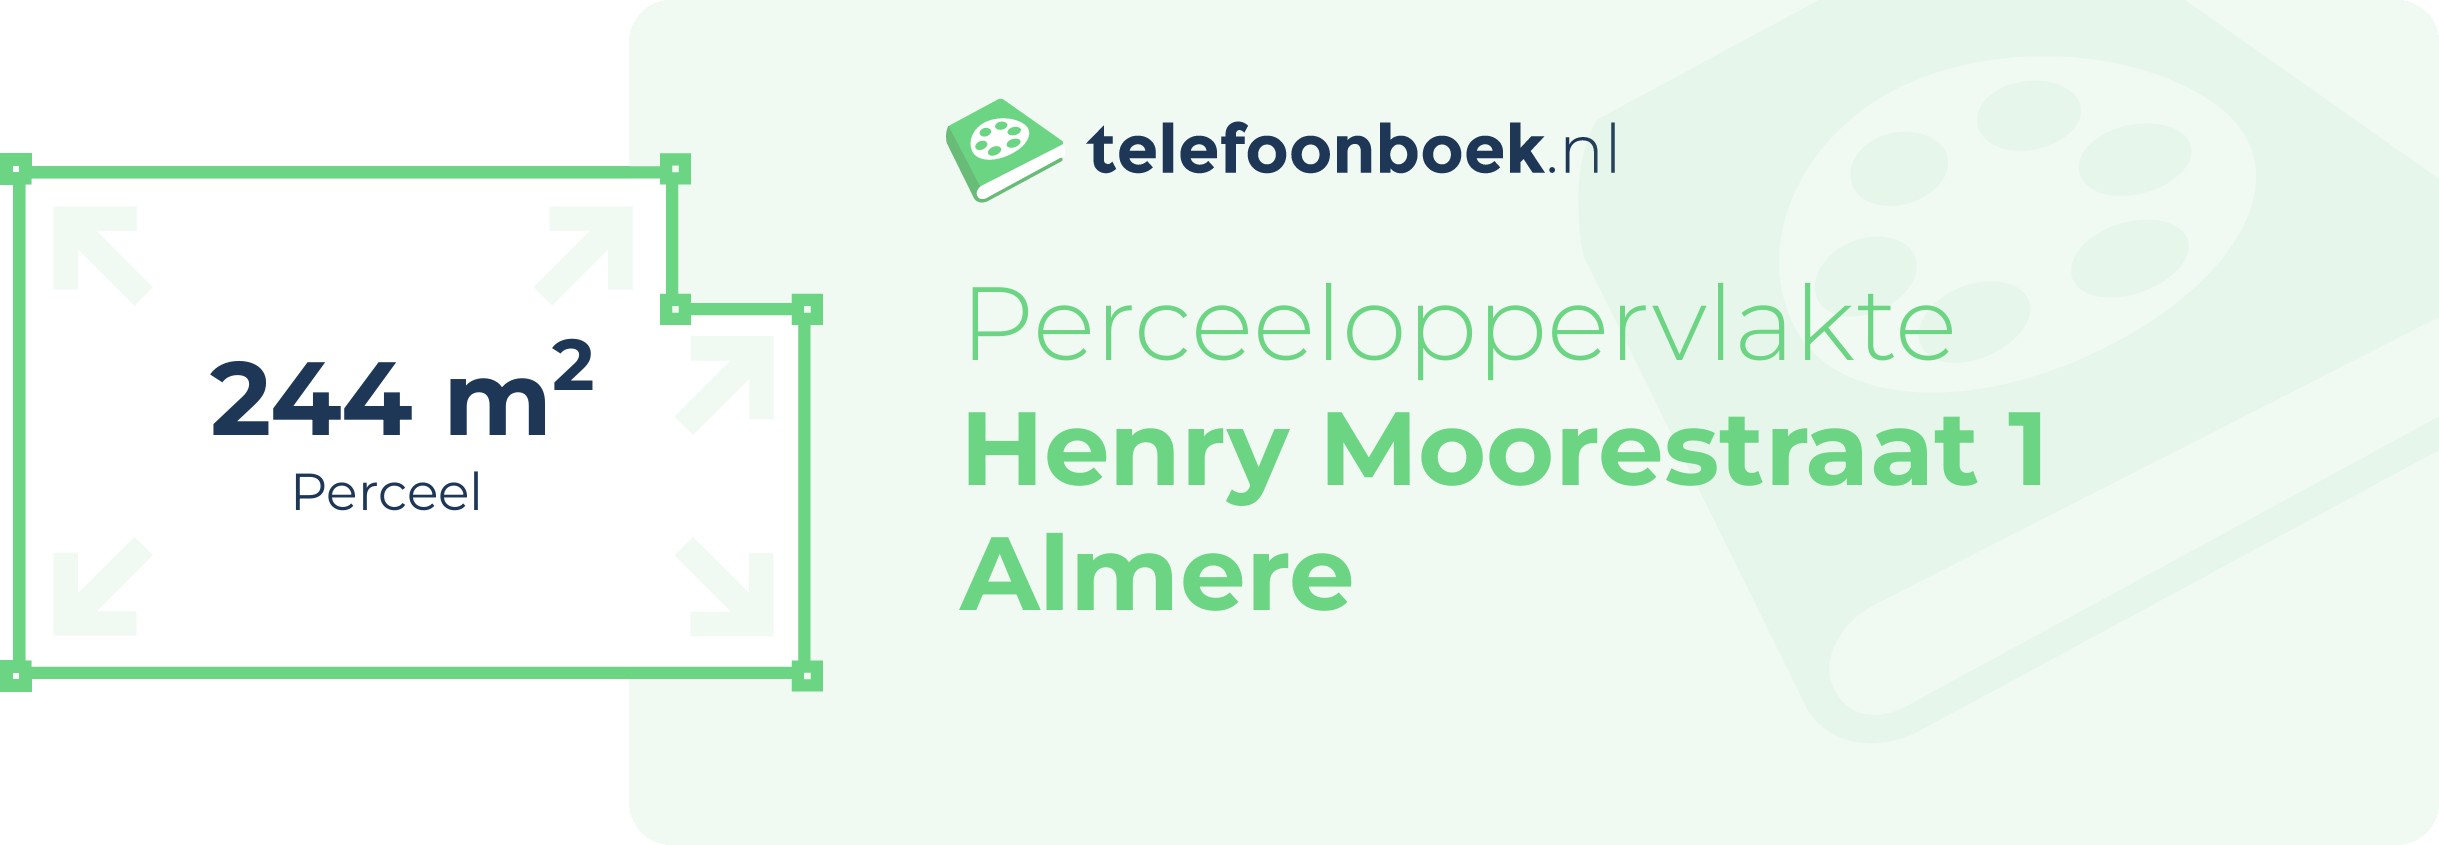 Perceeloppervlakte Henry Moorestraat 1 Almere